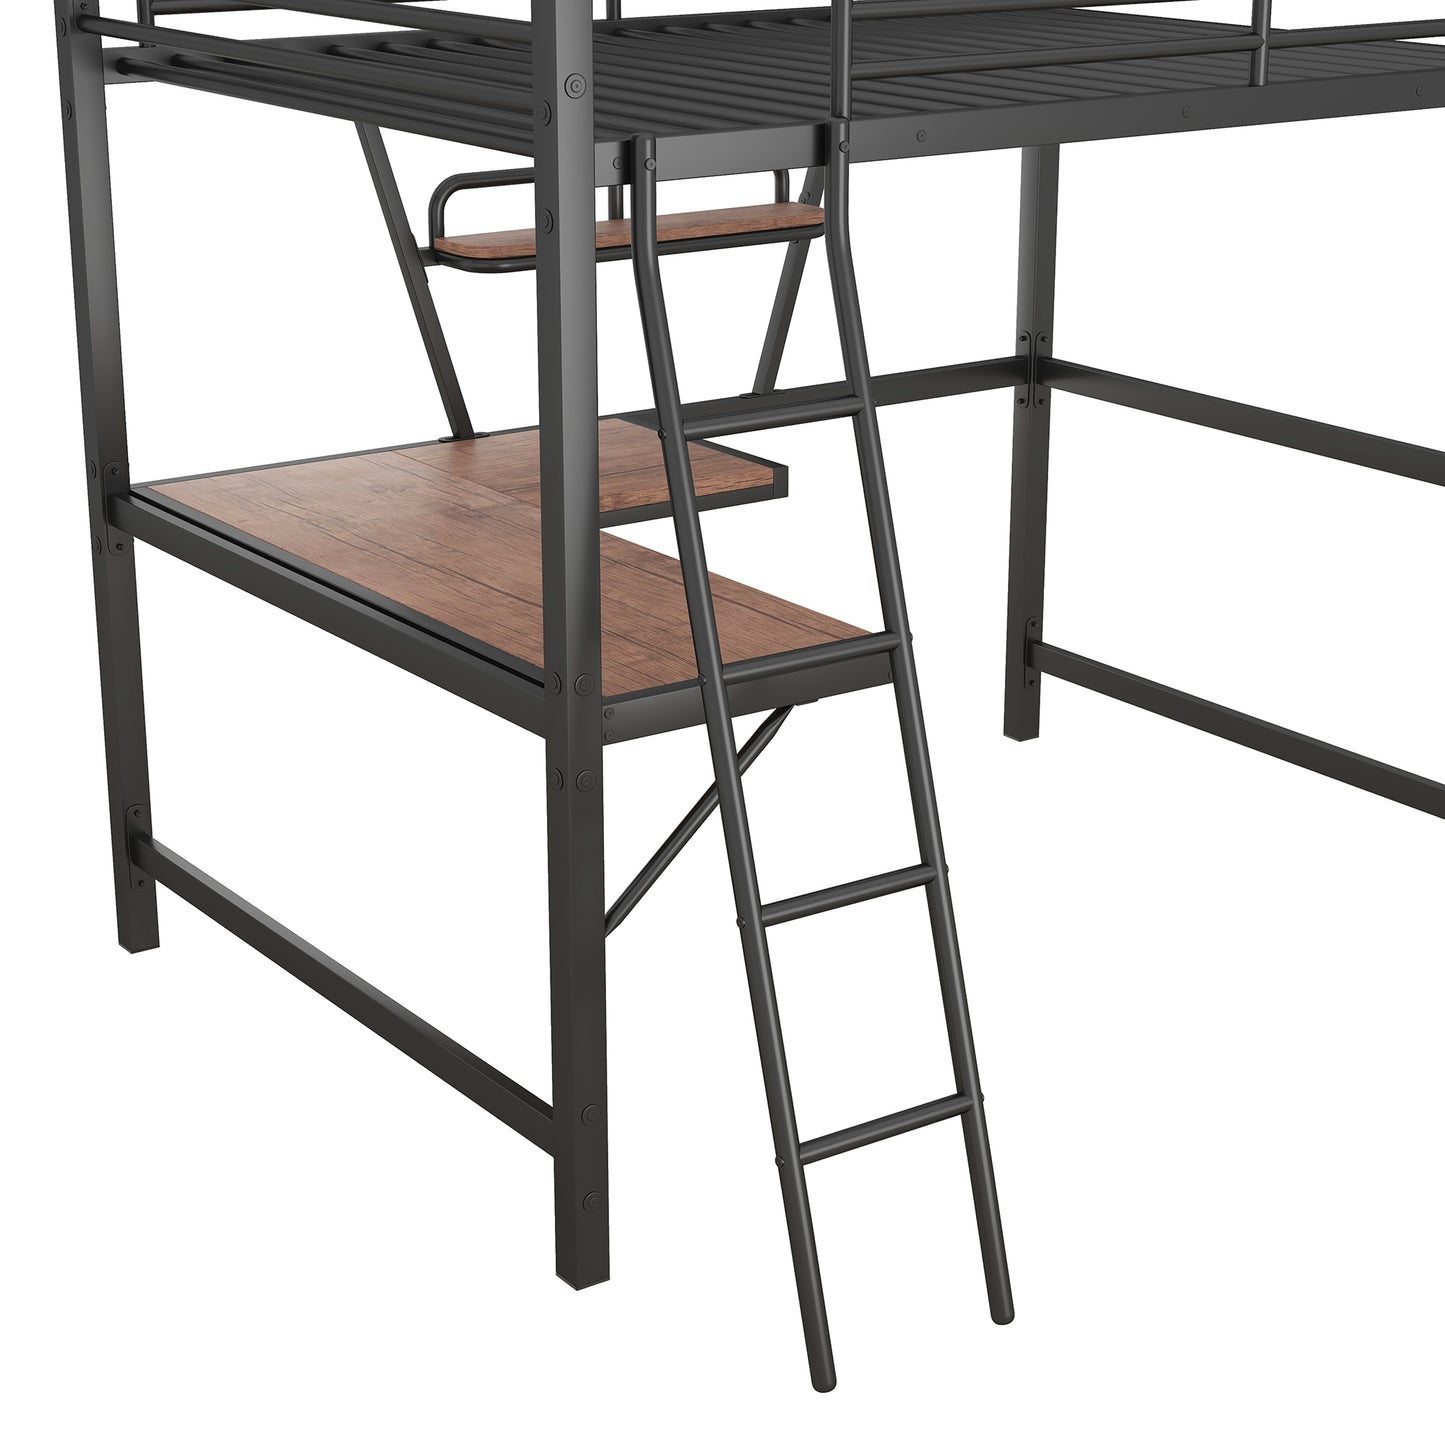 Full Size Loft Metal&MDF Bed with Desk and Shelf, Black